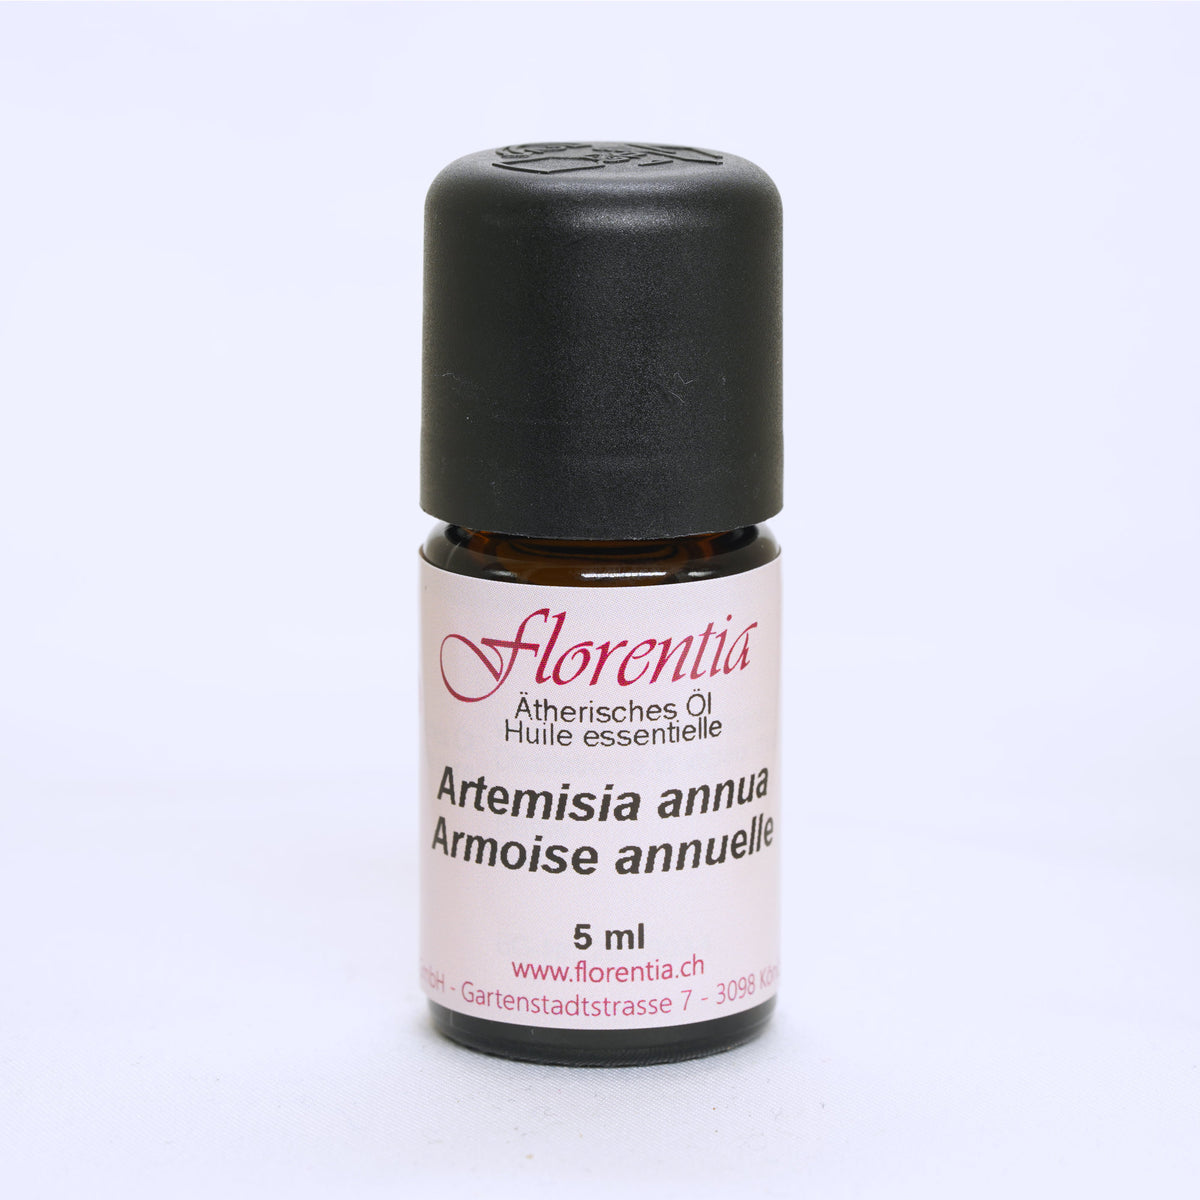 Artemisia annua 5ml wild